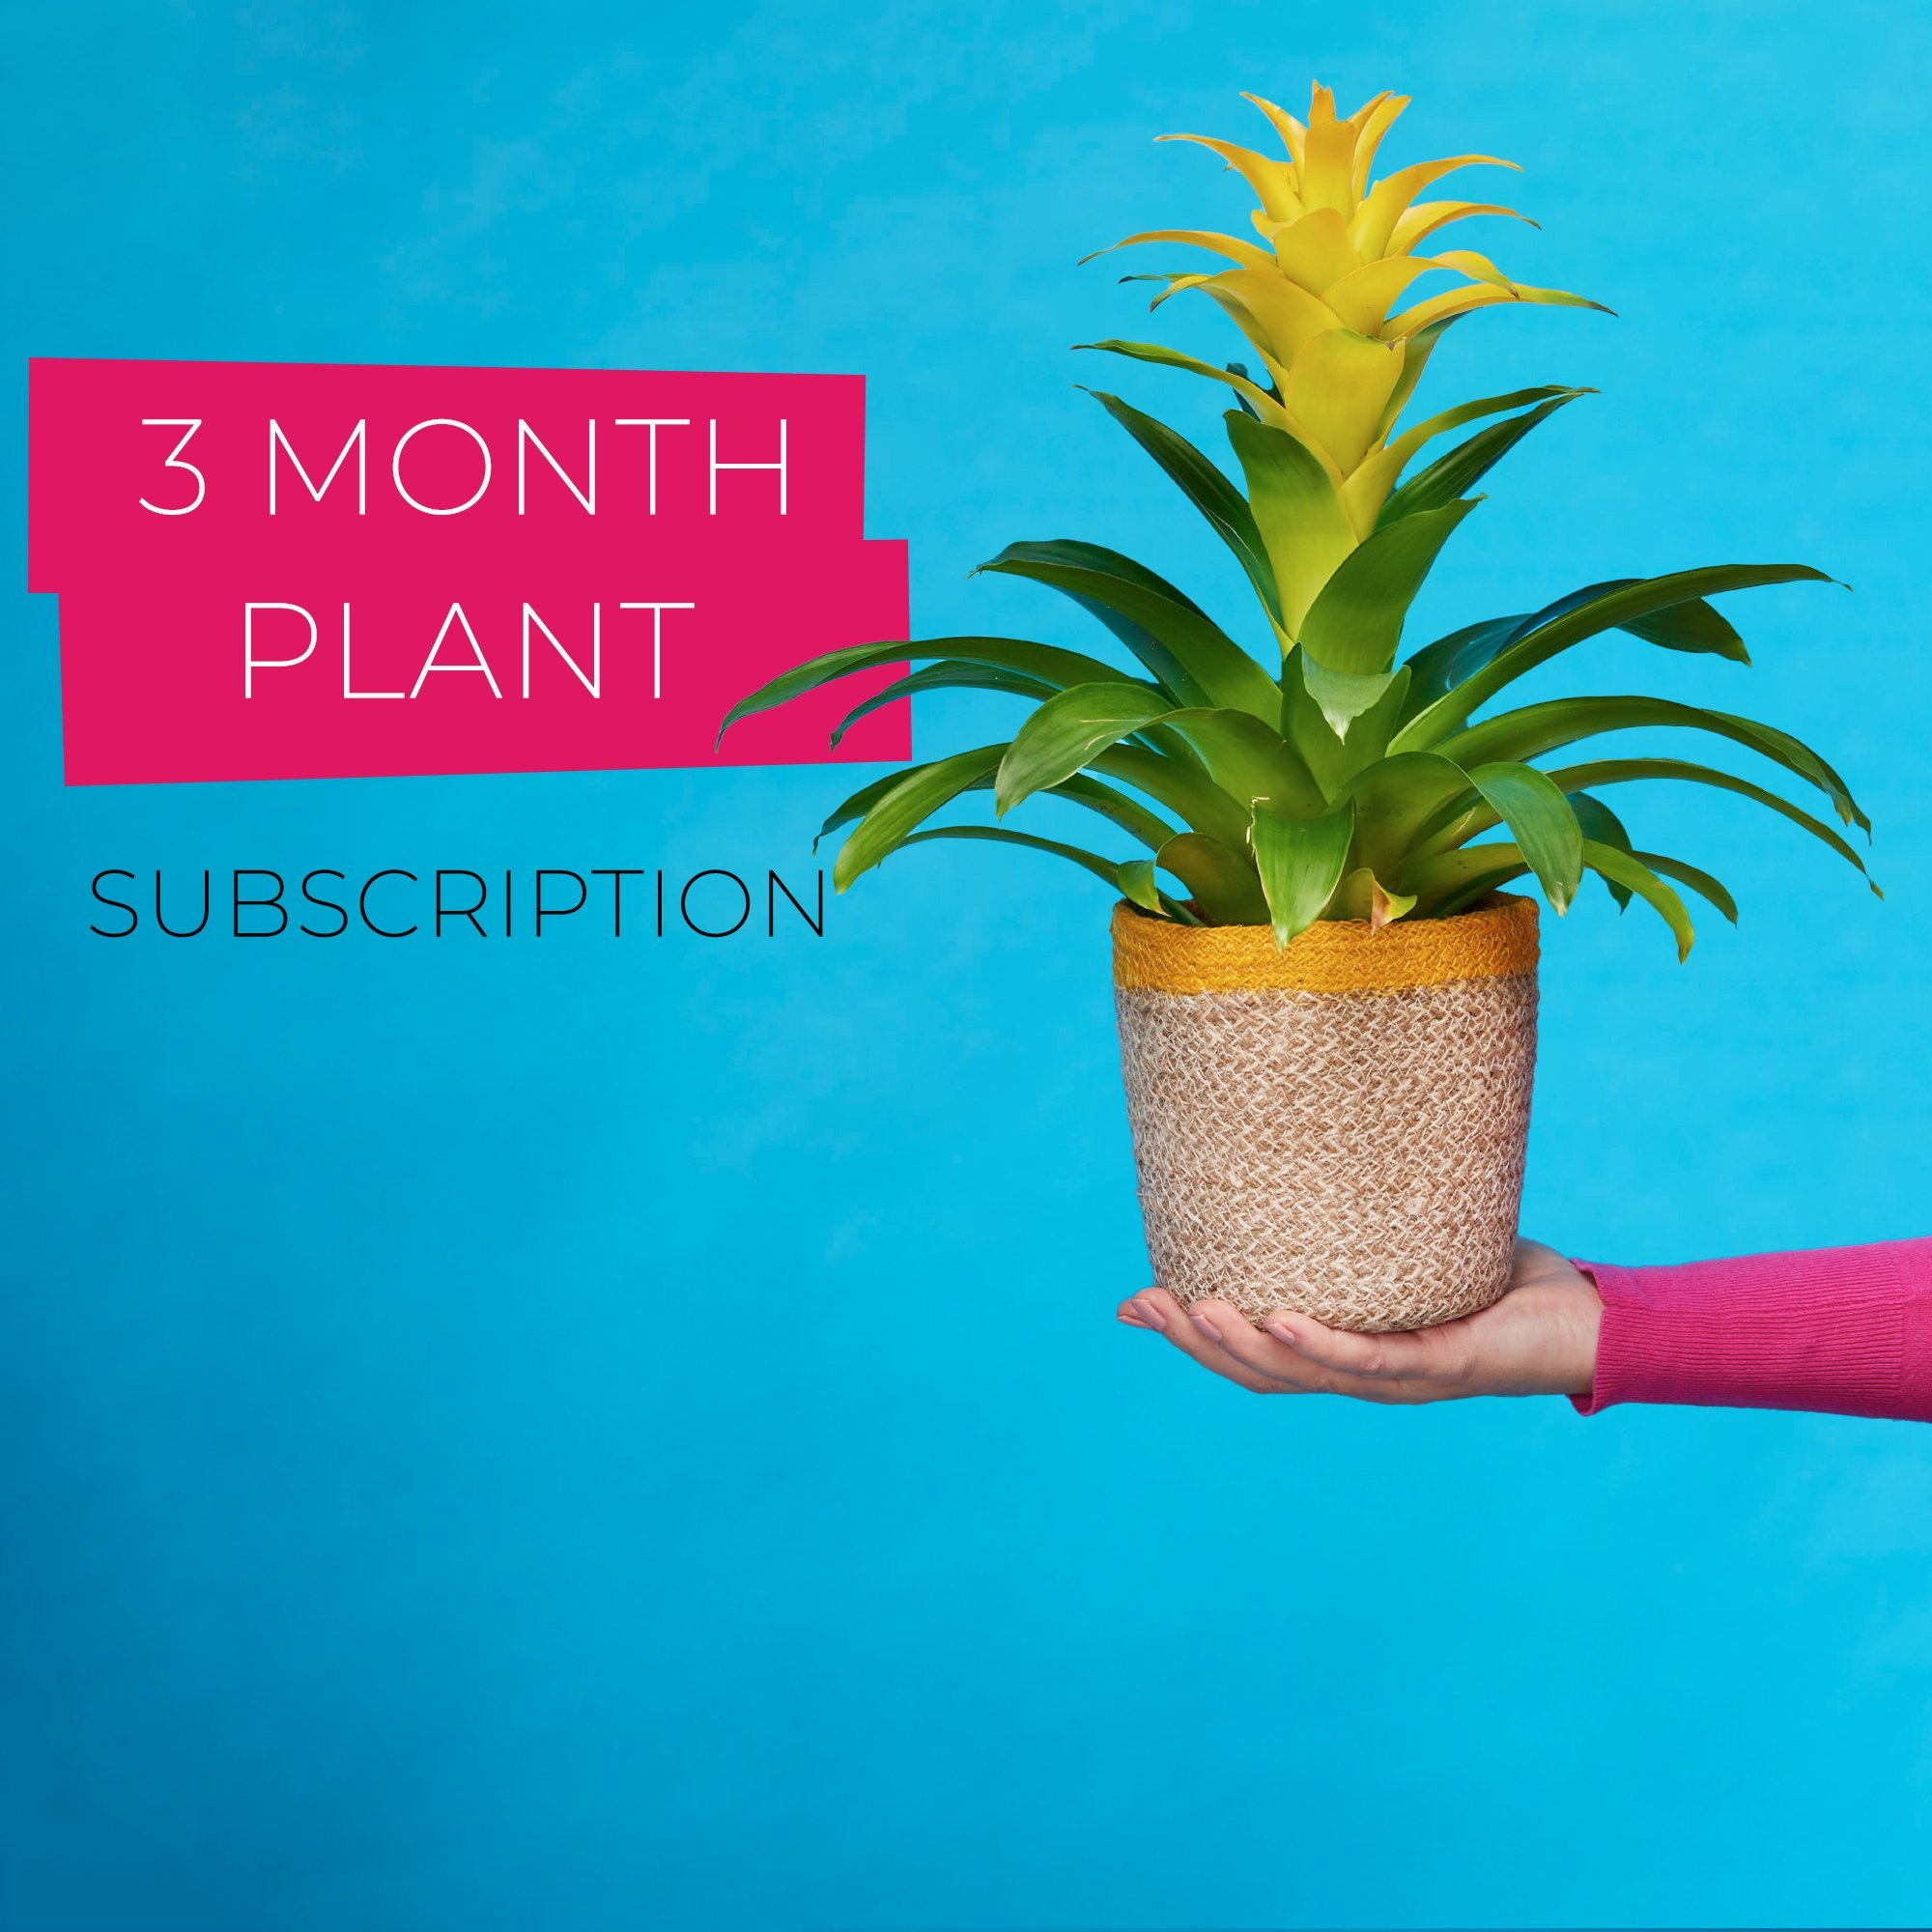 3 Month Plant Subscription image